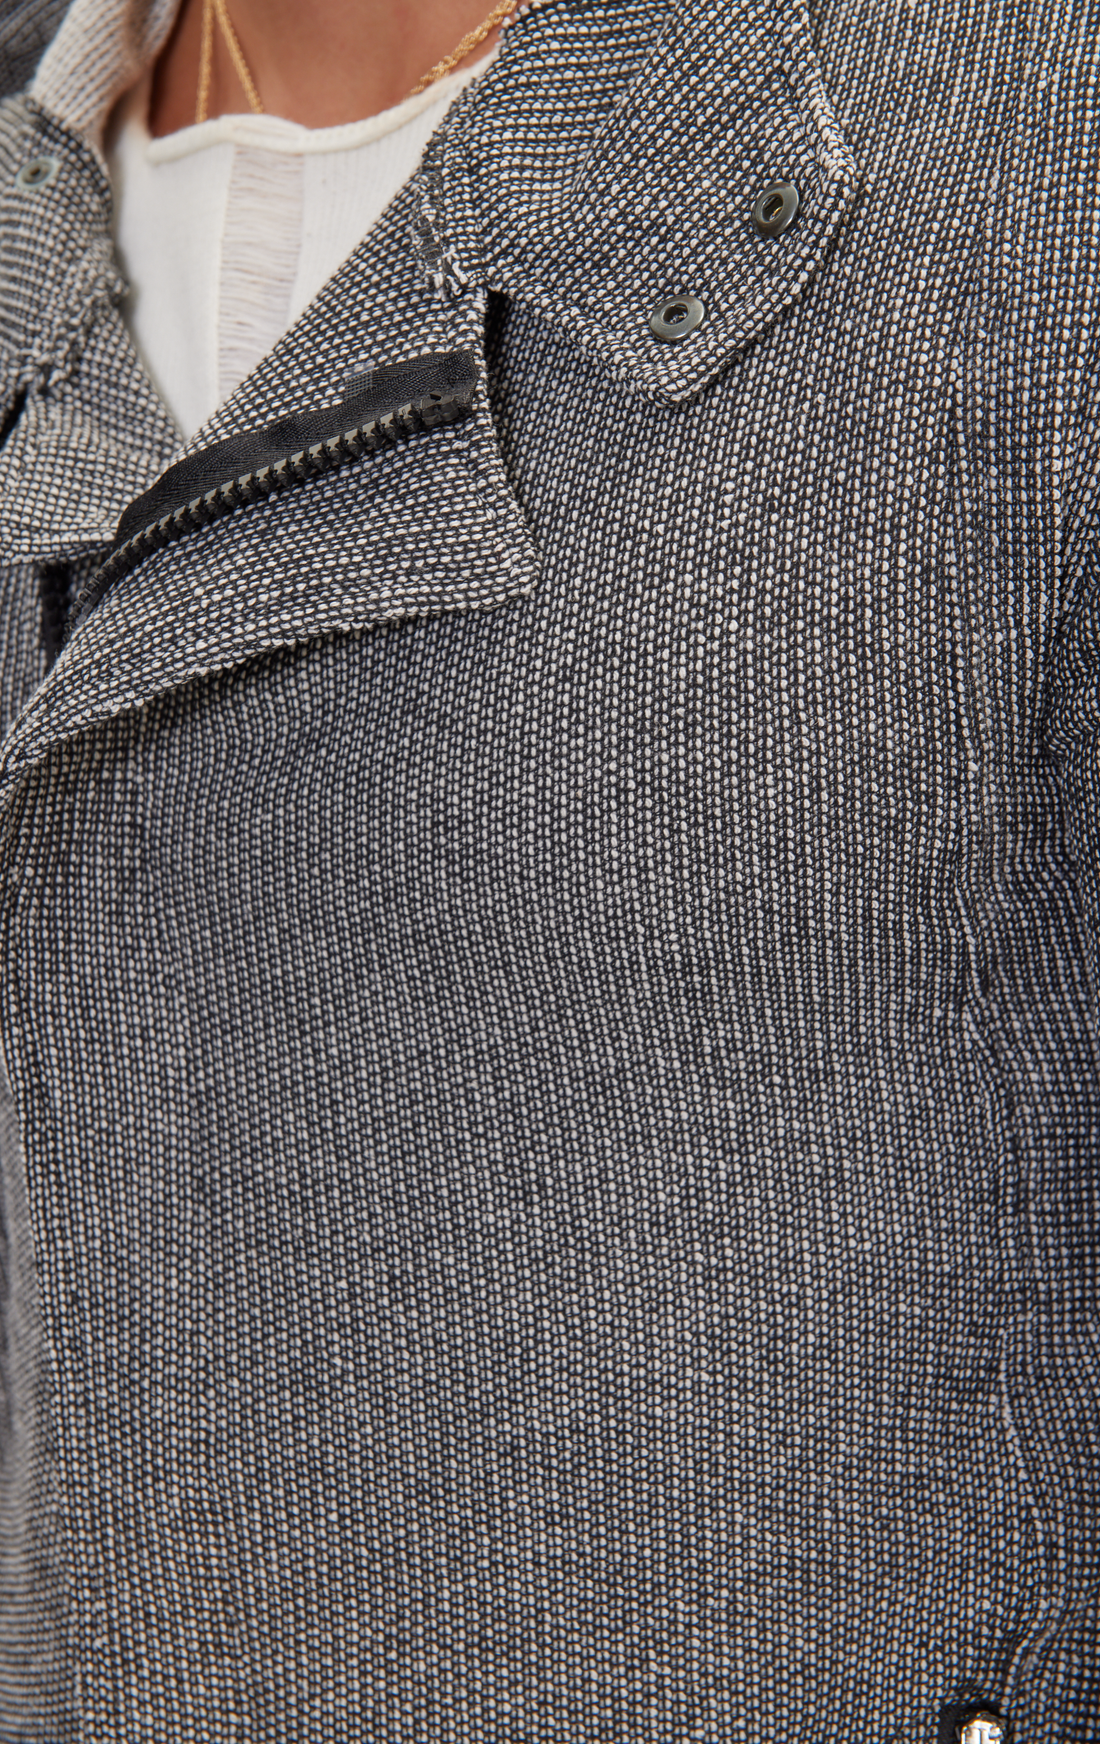 Asymmetric Rebel Cardigan Zipper Closure With Hood - Black White